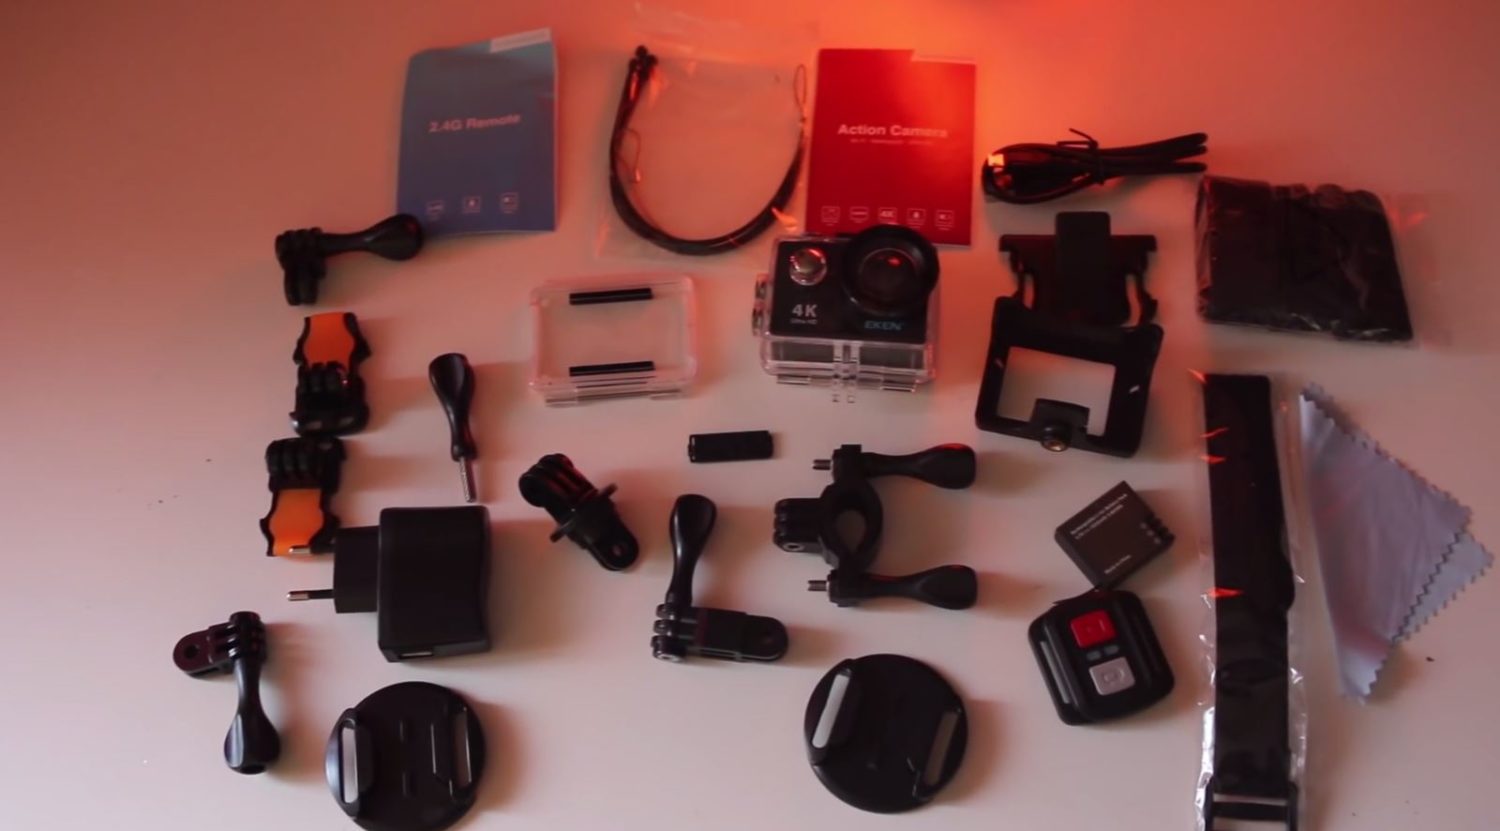 eken h9r 4k action camera - accessories